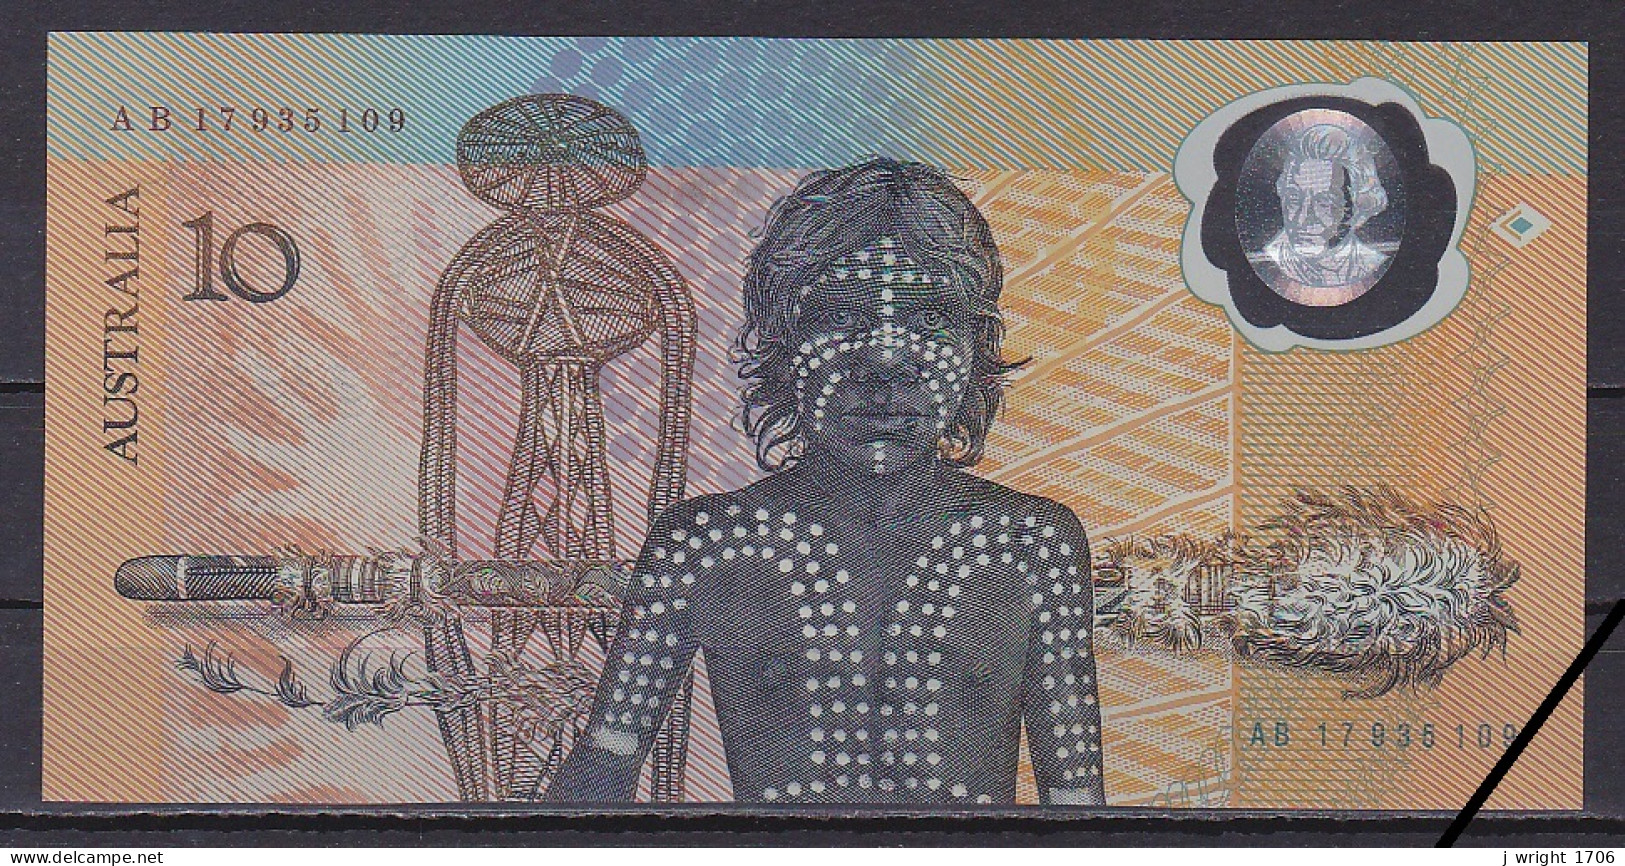 Australia, 10 Dollars, 1988/Prefix AB, Grade A-UNC - 1988 (10$ Polymer Notes)